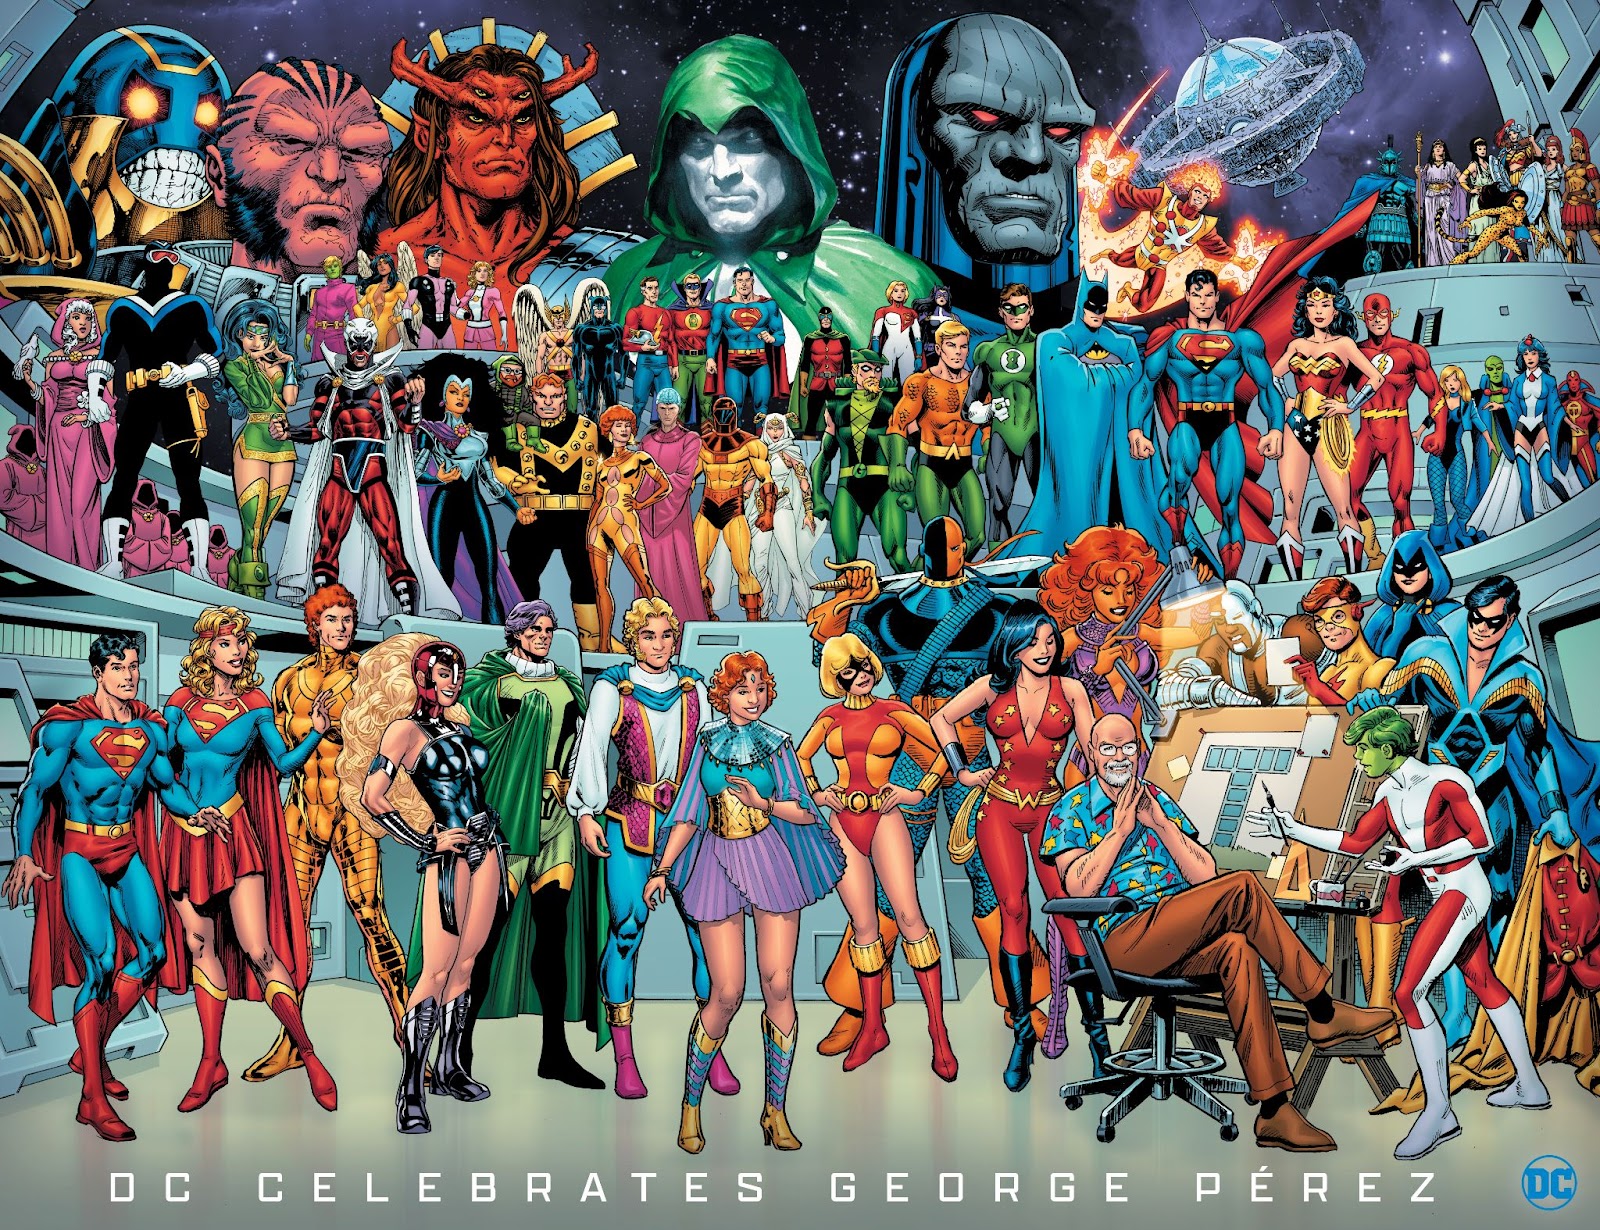 DC Comics omaggia George Pérez per il suo compleanno - MegaNerd.it